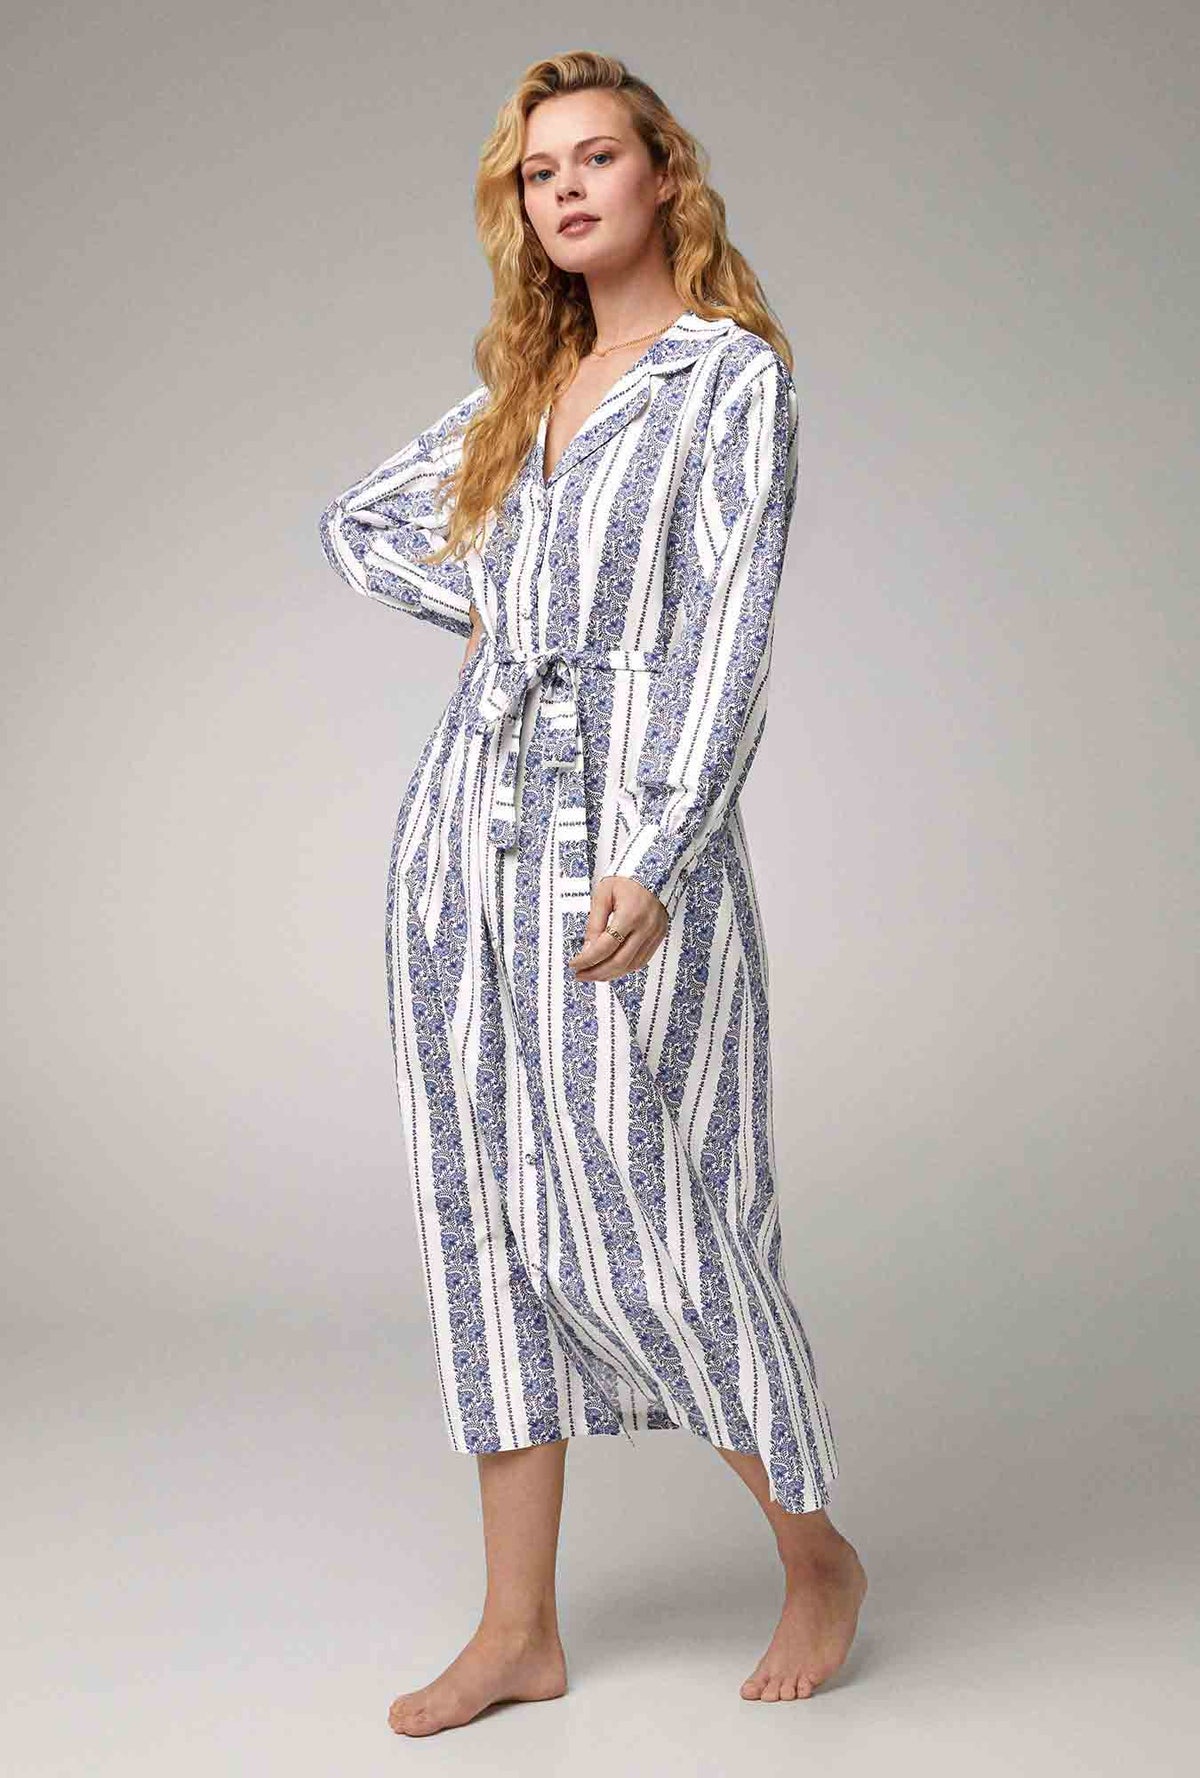 A lady wearing white Notch Collar Woven Cotton Silk Maxi Dress with  Provencal Stripe print